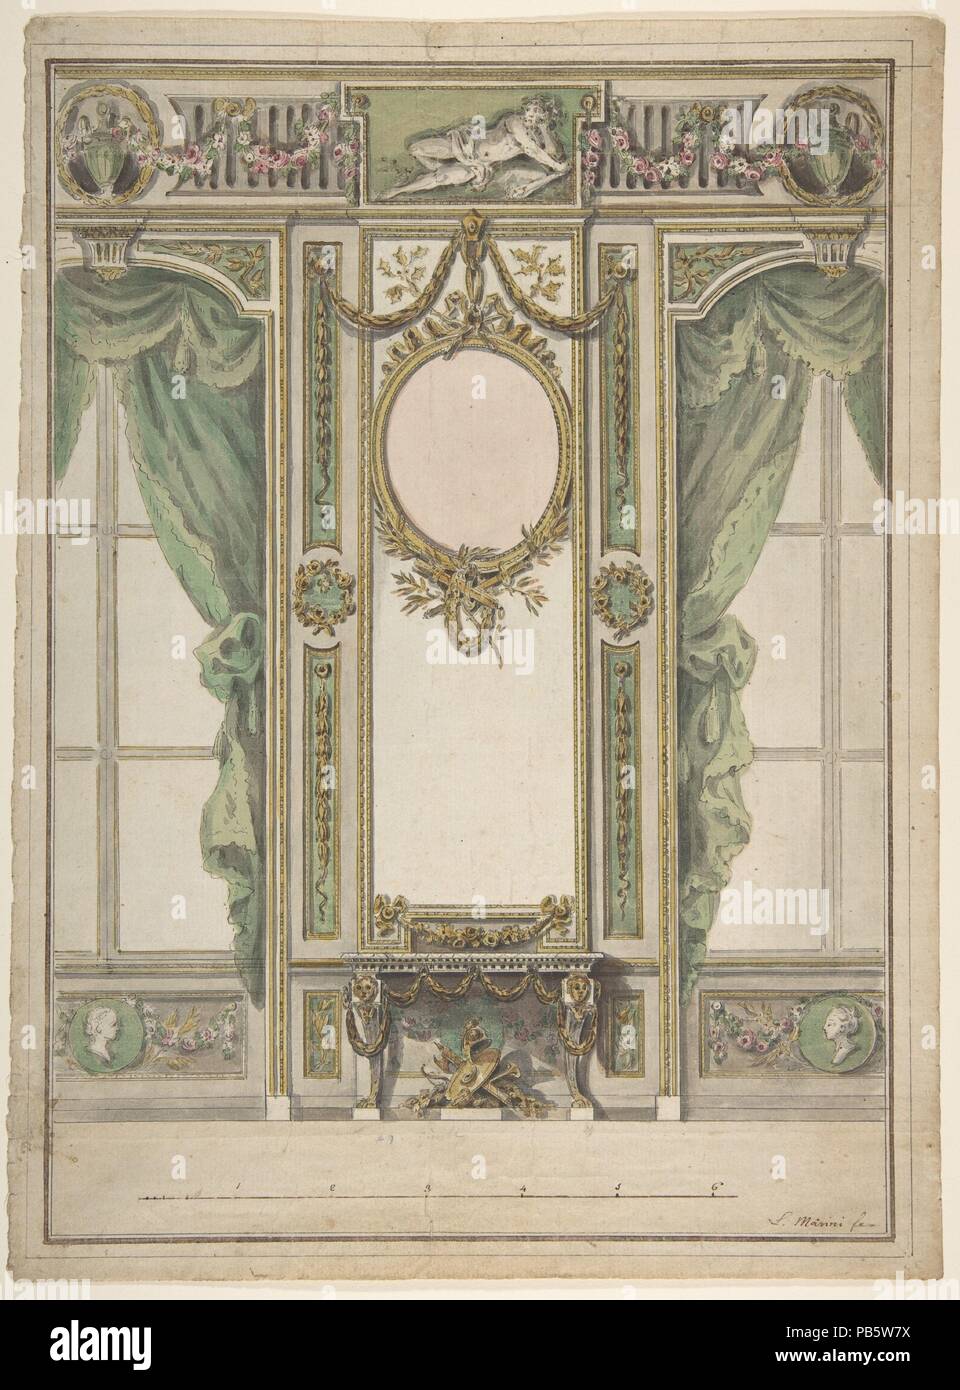 Design for a Palace Interior. Artist: Workshop of Leonardo Marini (Italian, Piedmontese documented ca. 1730-after 1797). Dimensions: 14 1/4 x 10 1/2in. (36.2 x 26.7cm). Date: 1730-1997. Museum: Metropolitan Museum of Art, New York, USA. Stock Photo